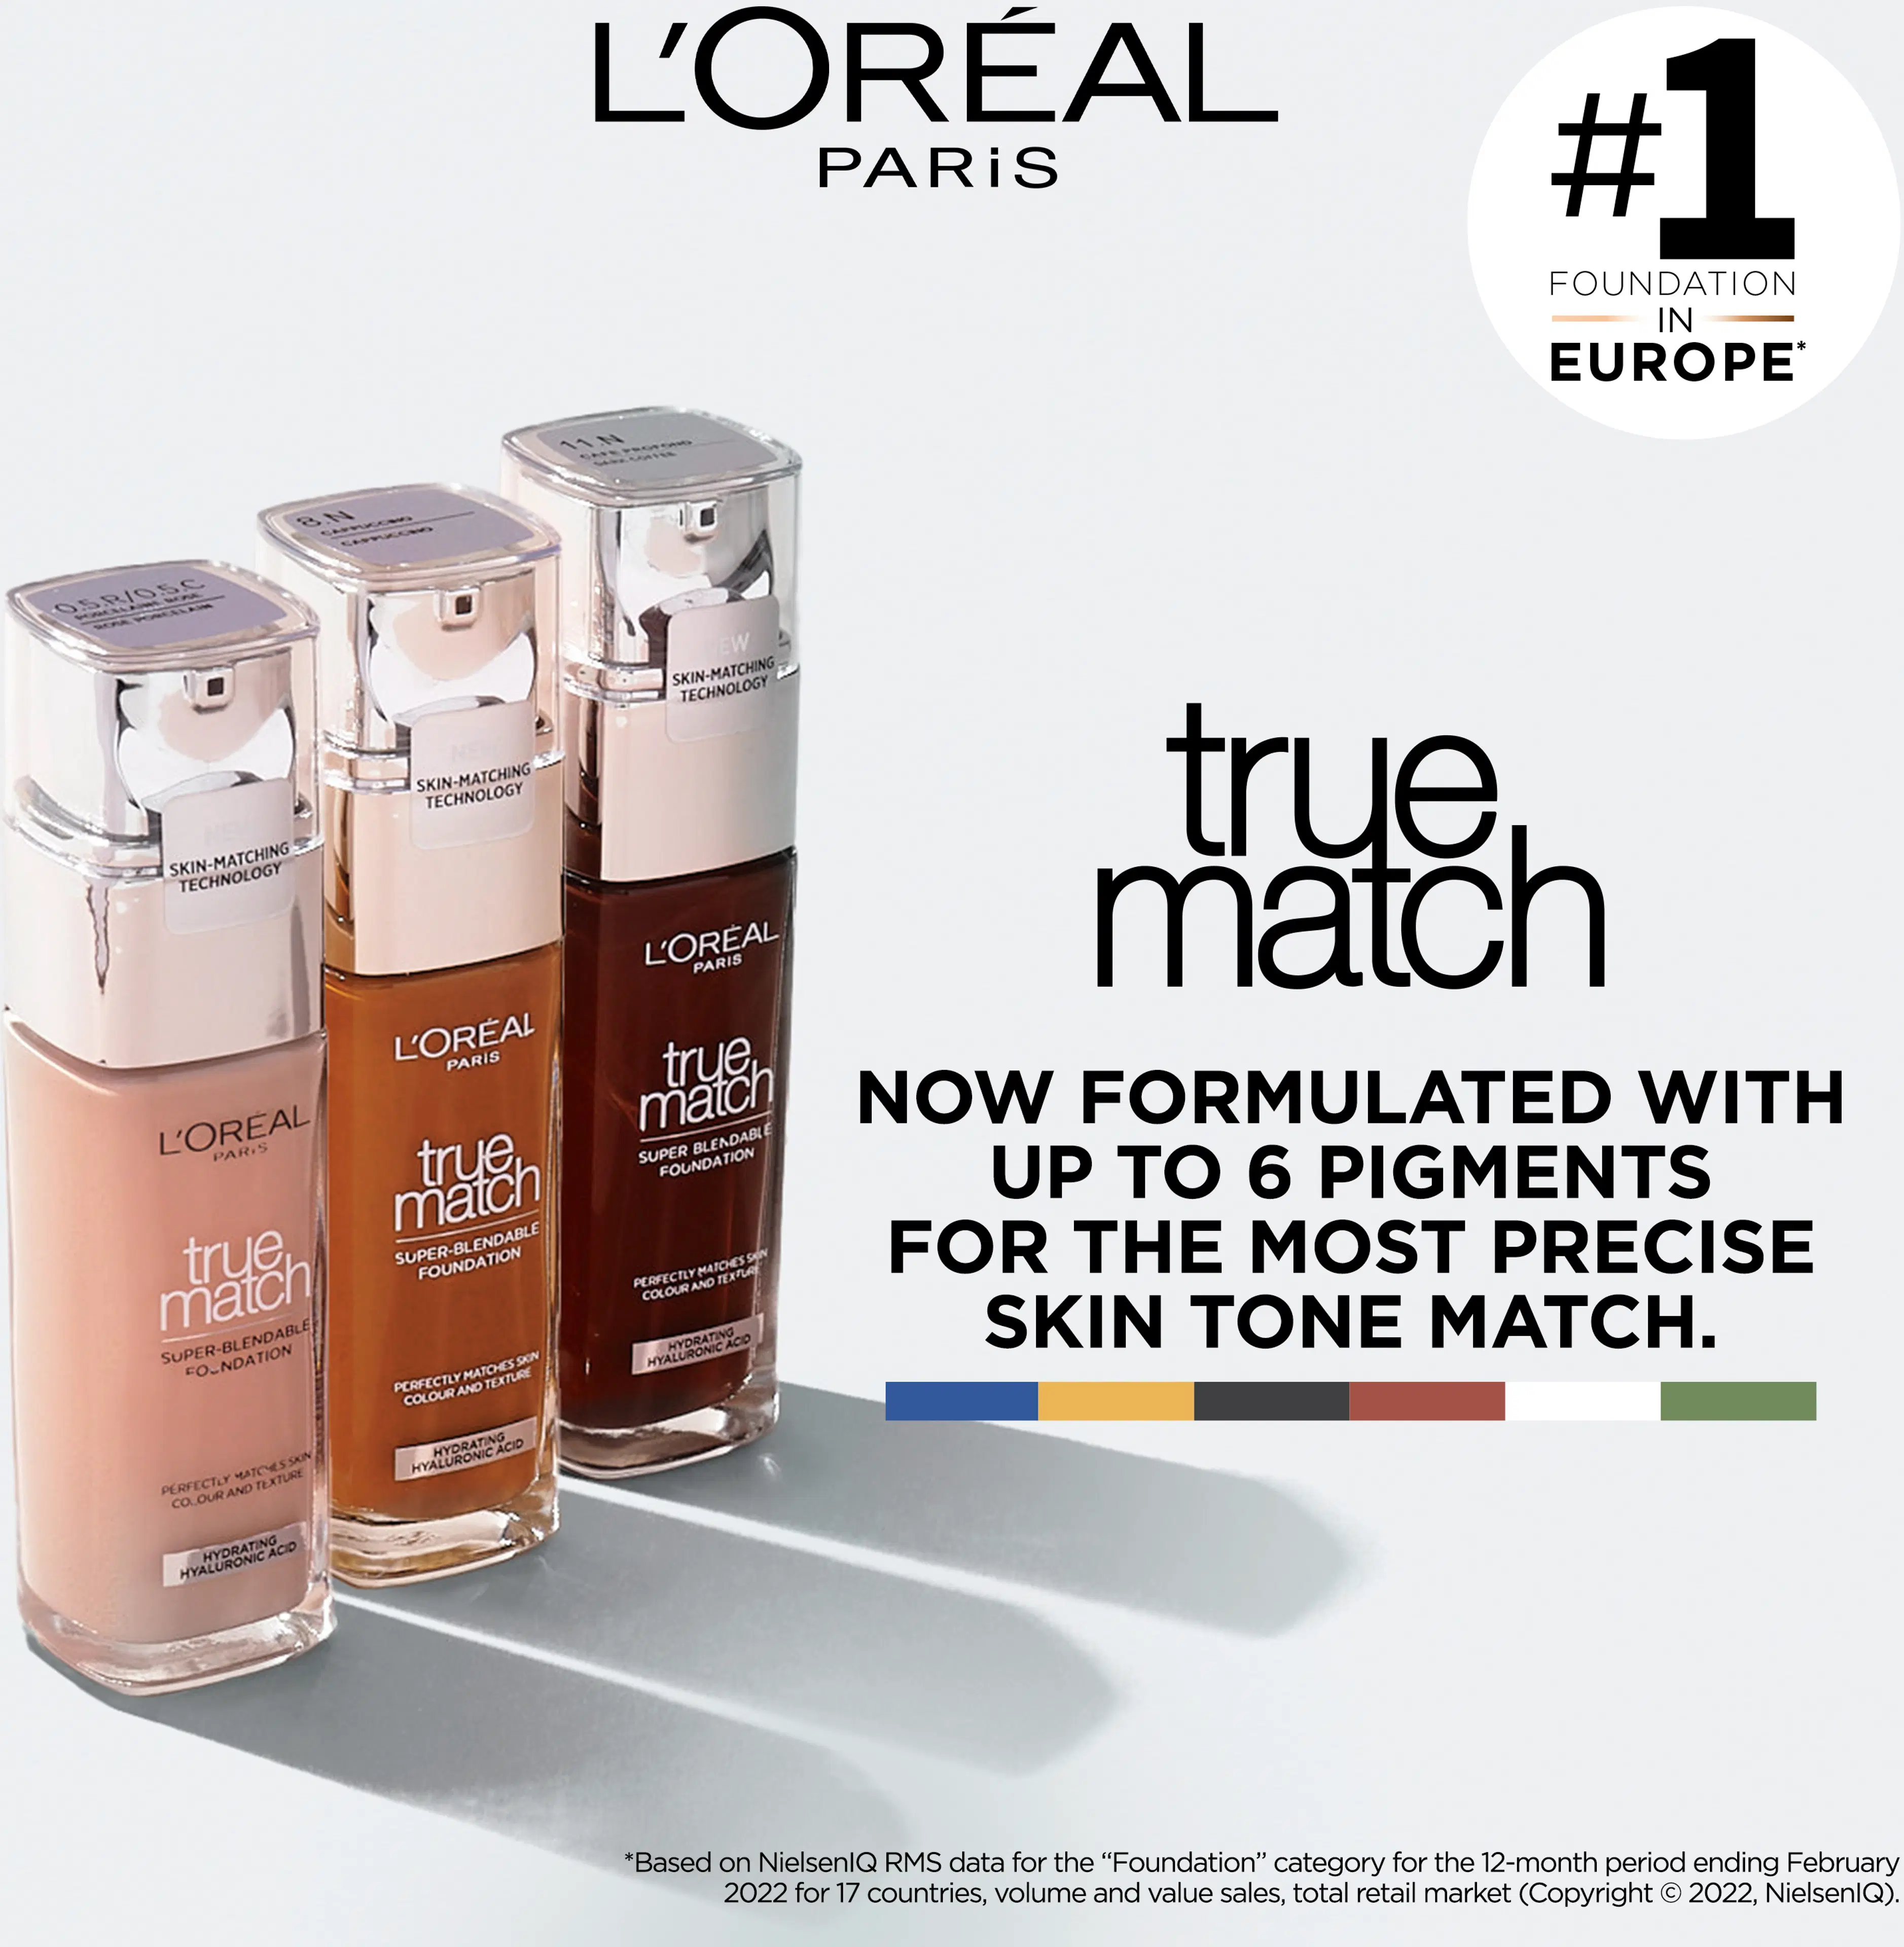 L'Oréal Paris True Match 1.N Ivory meikkivoide 30ml